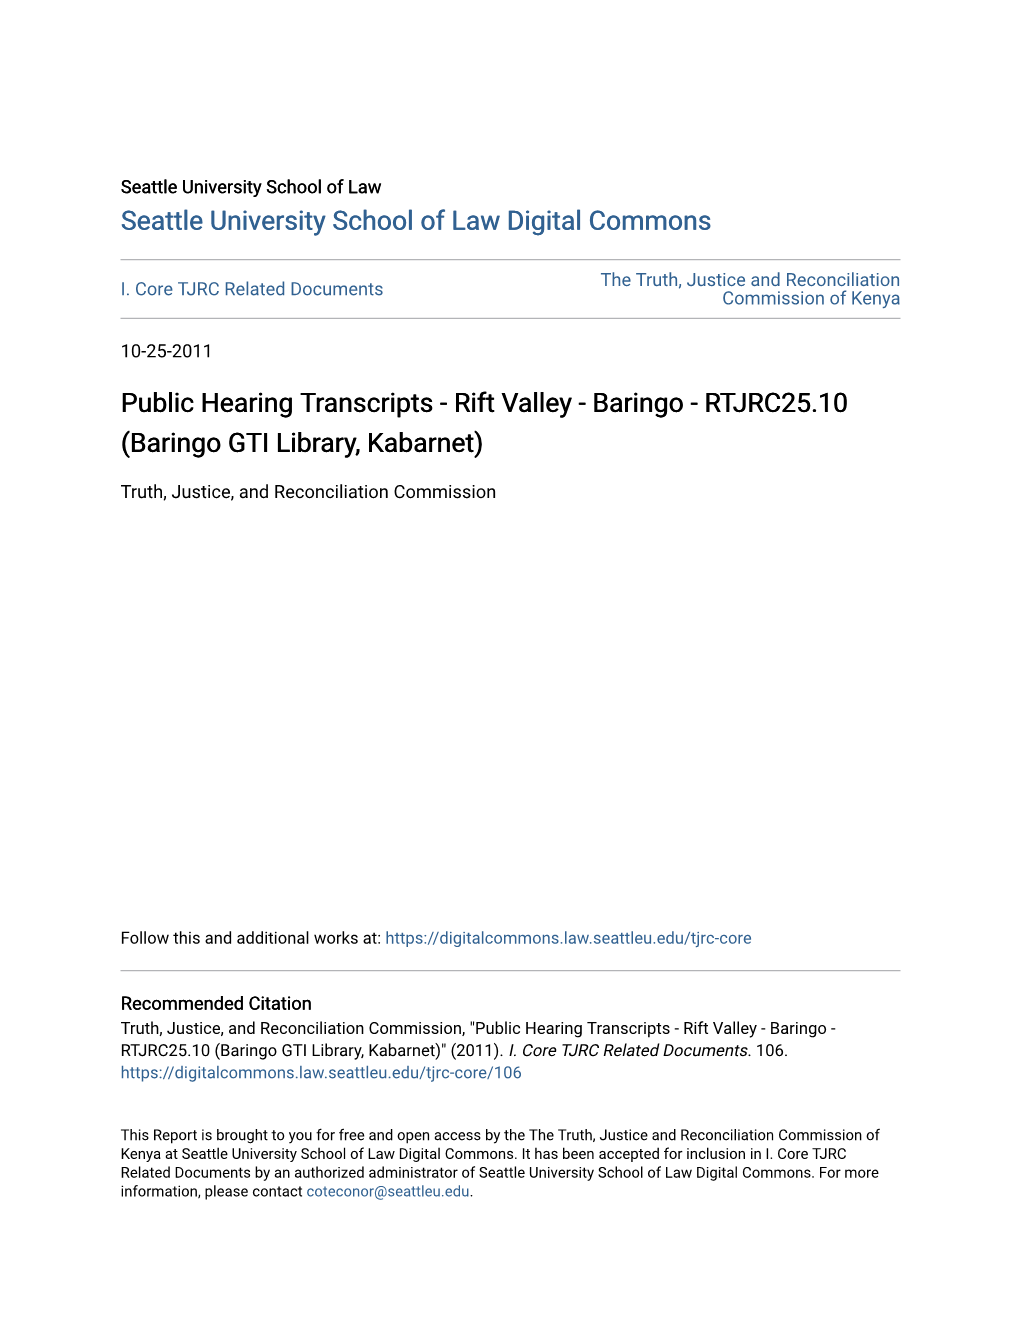 Public Hearing Transcripts - Rift Valley - Baringo - RTJRC25.10 (Baringo GTI Library, Kabarnet)